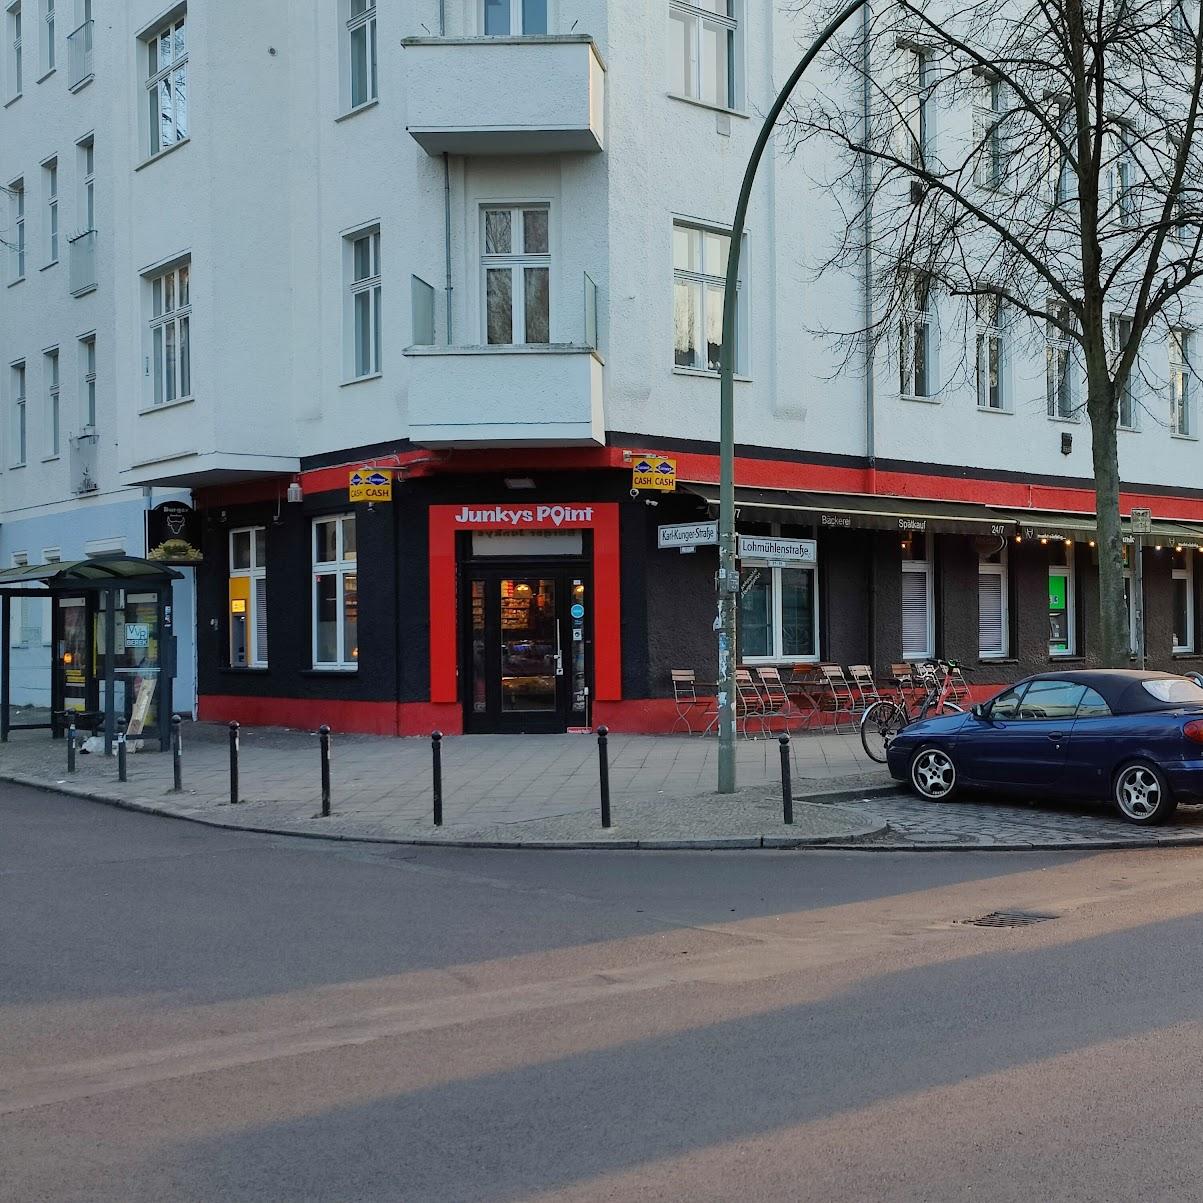 Restaurant "Junkys Point" in Berlin